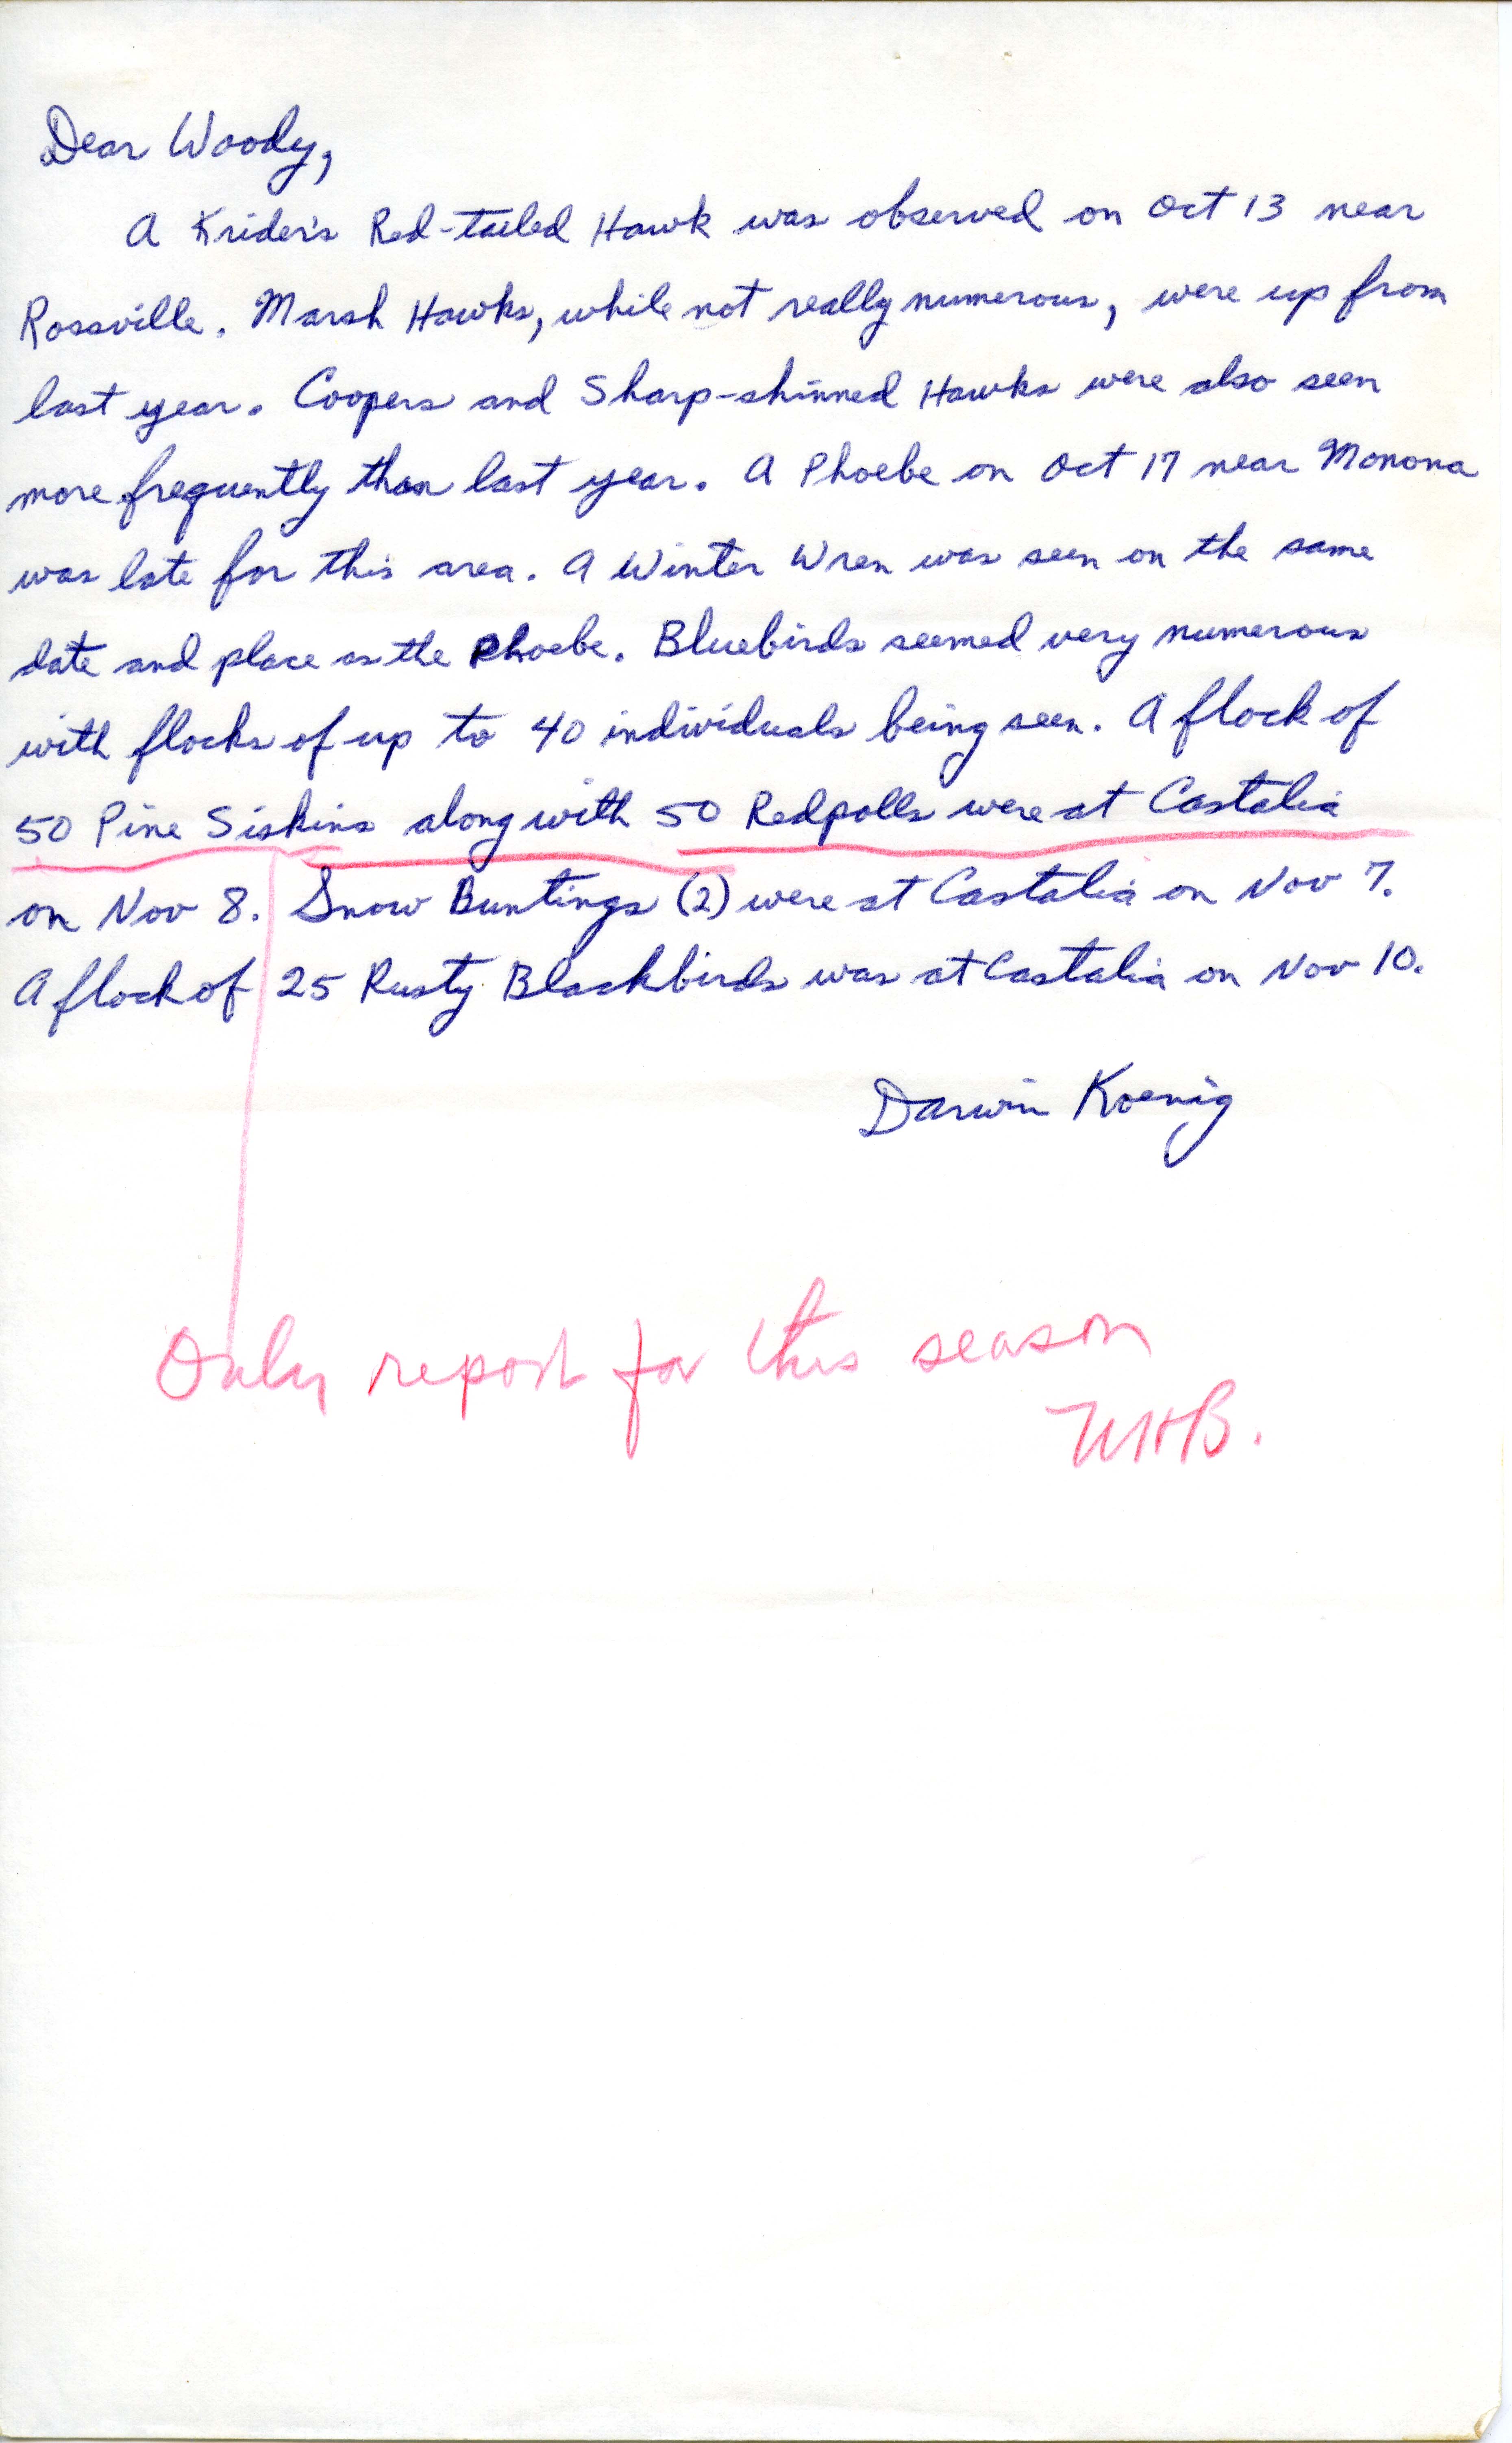 Darwin Koenig letter to Woodward H. Brown regarding birds sighted, fall 1971